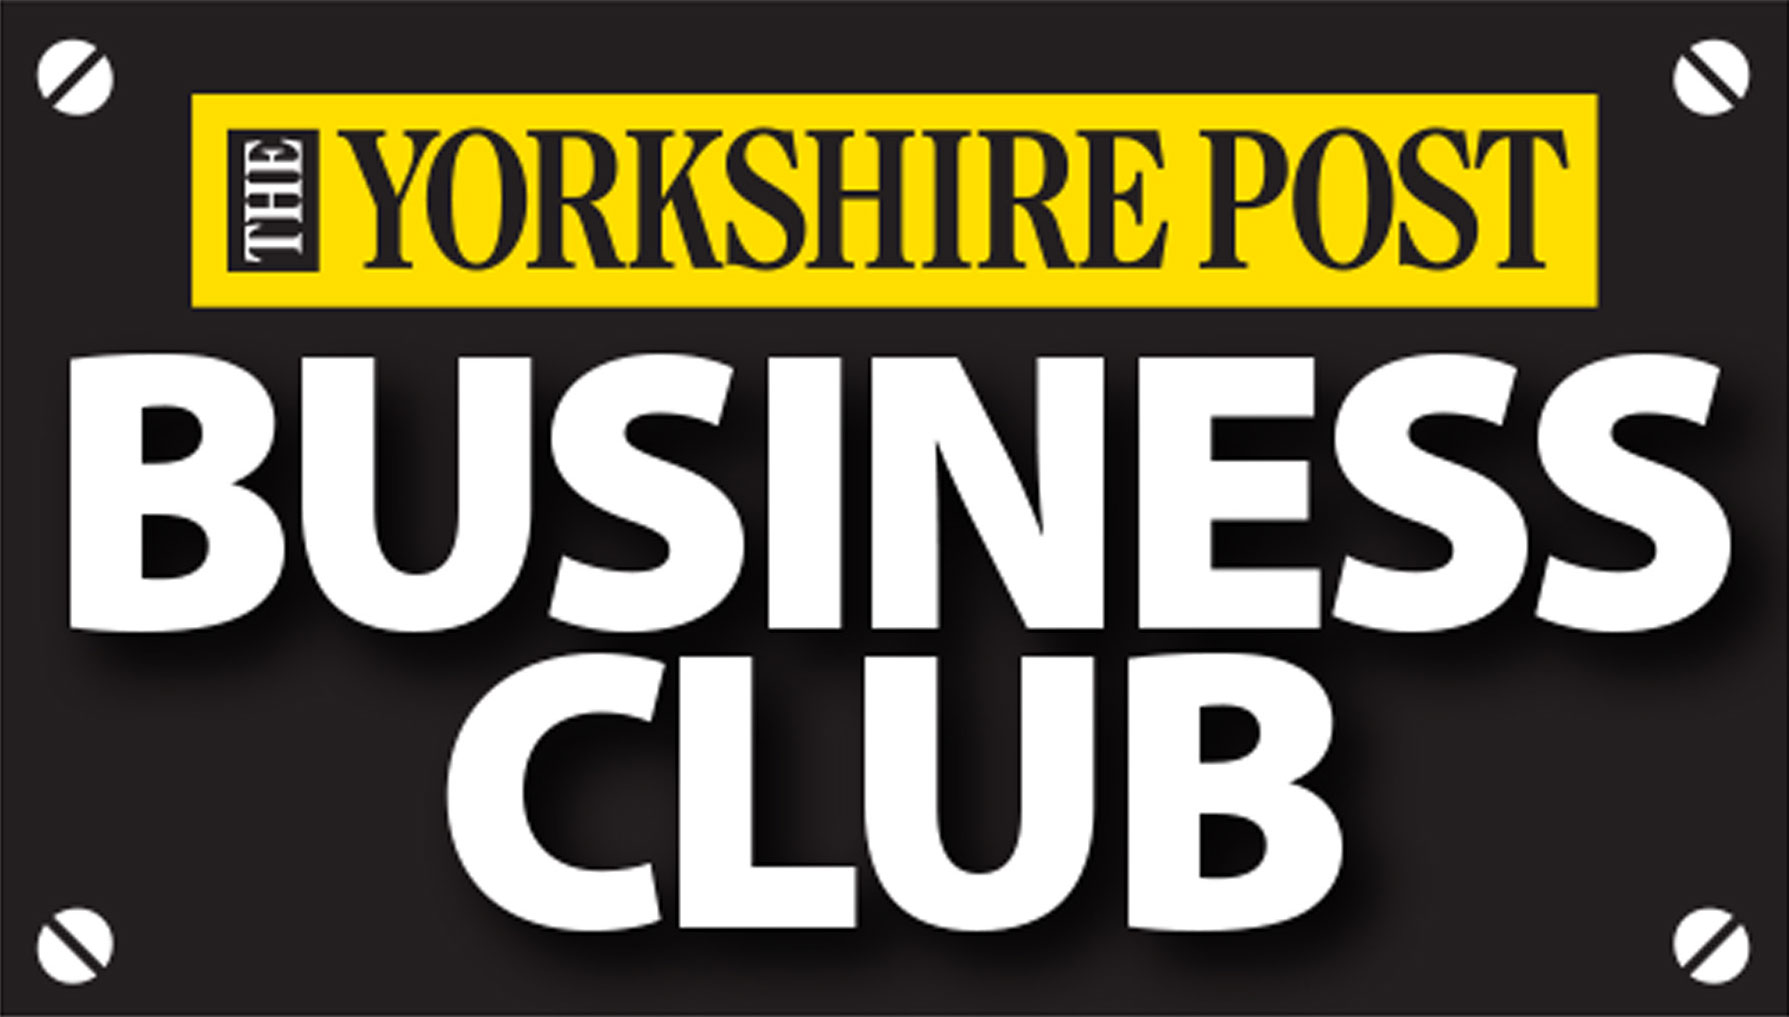 Yorkshire Post Business Club header